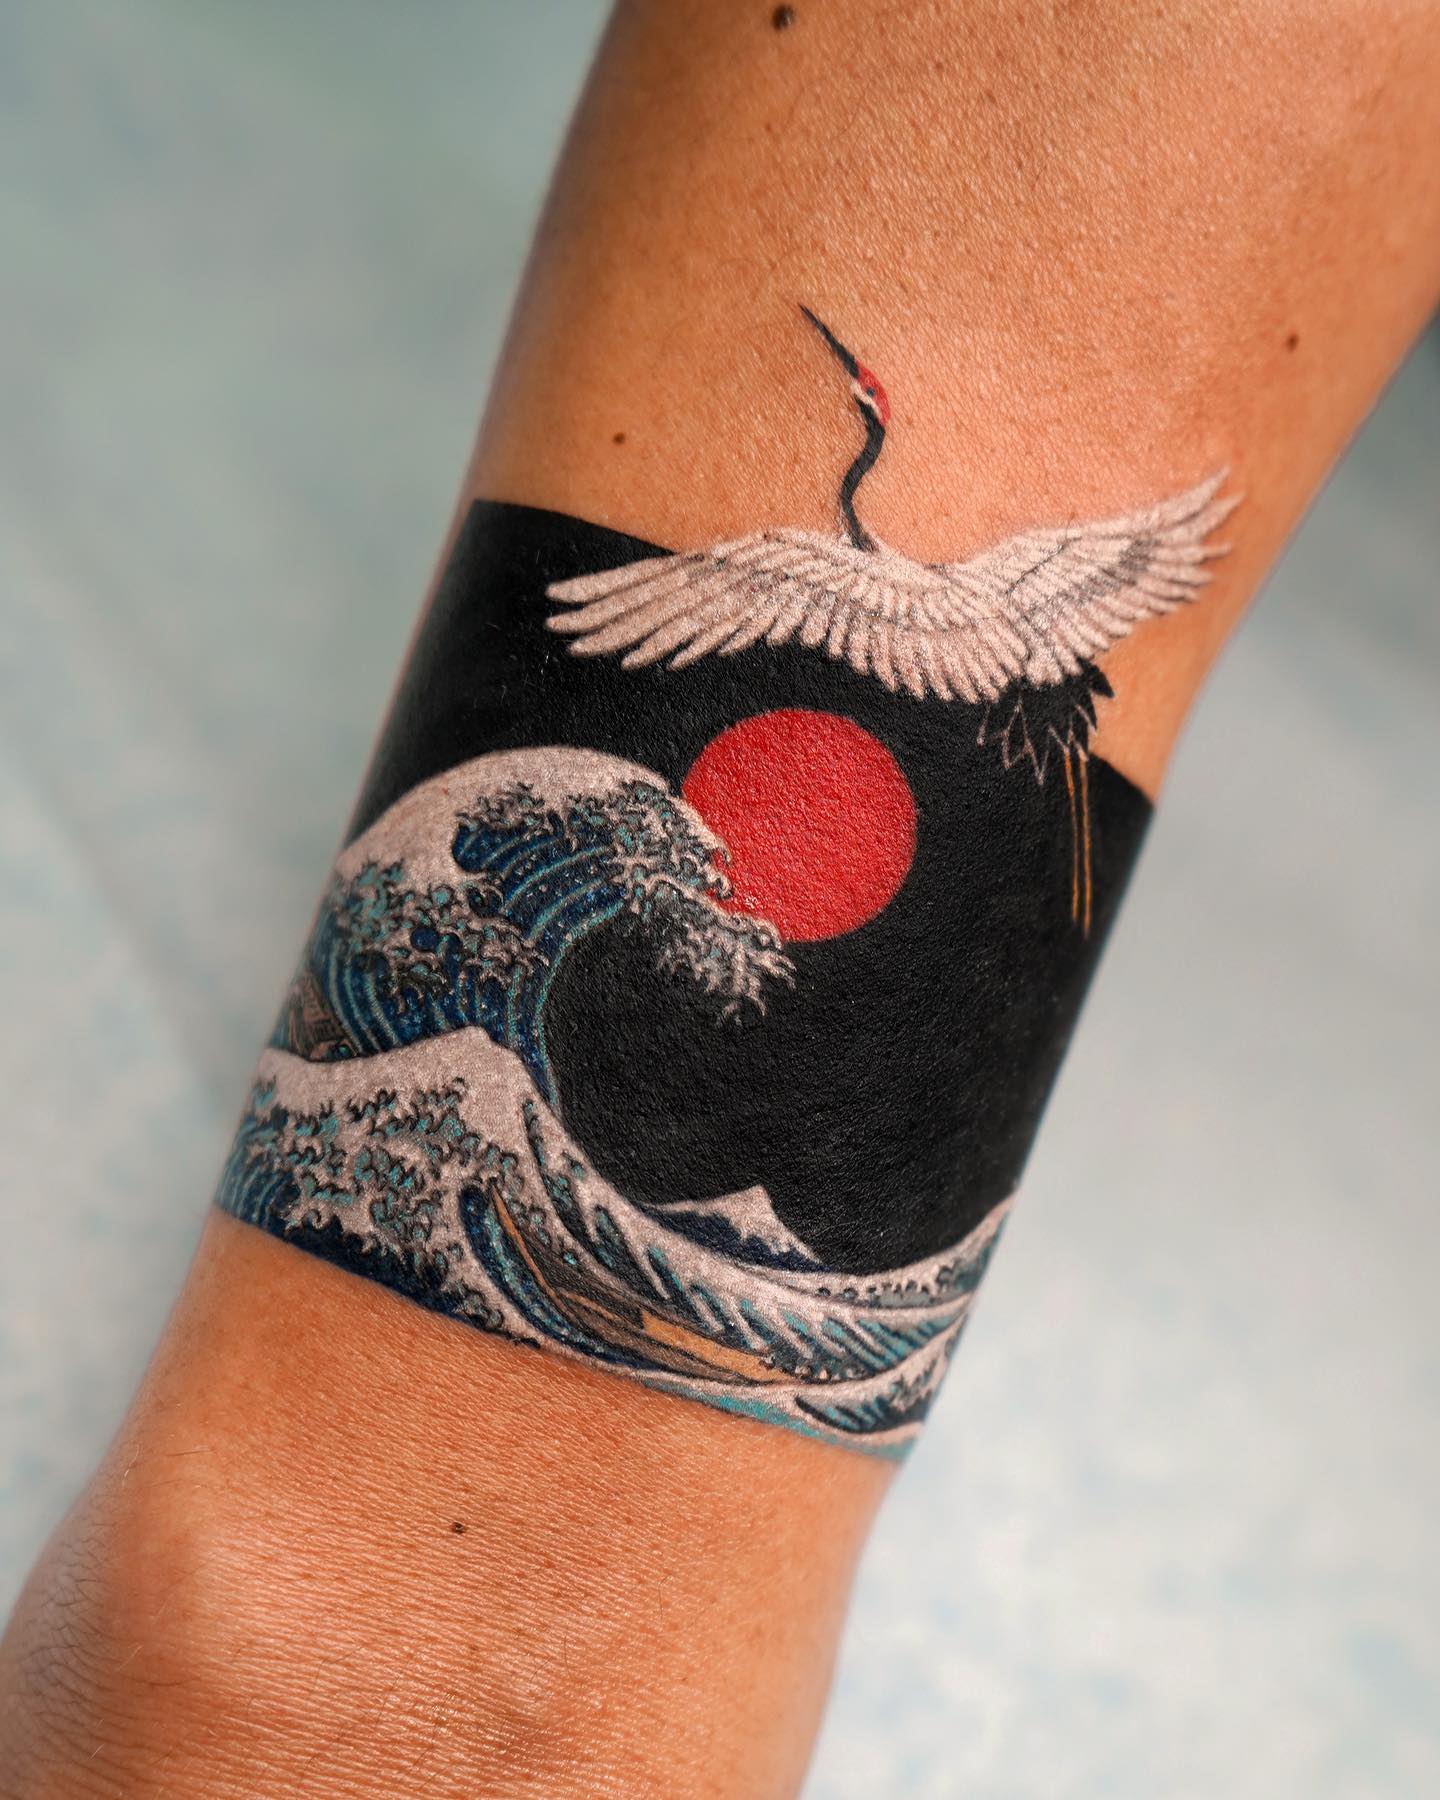 Colorful Japanese Sun Tattoo on Wrist